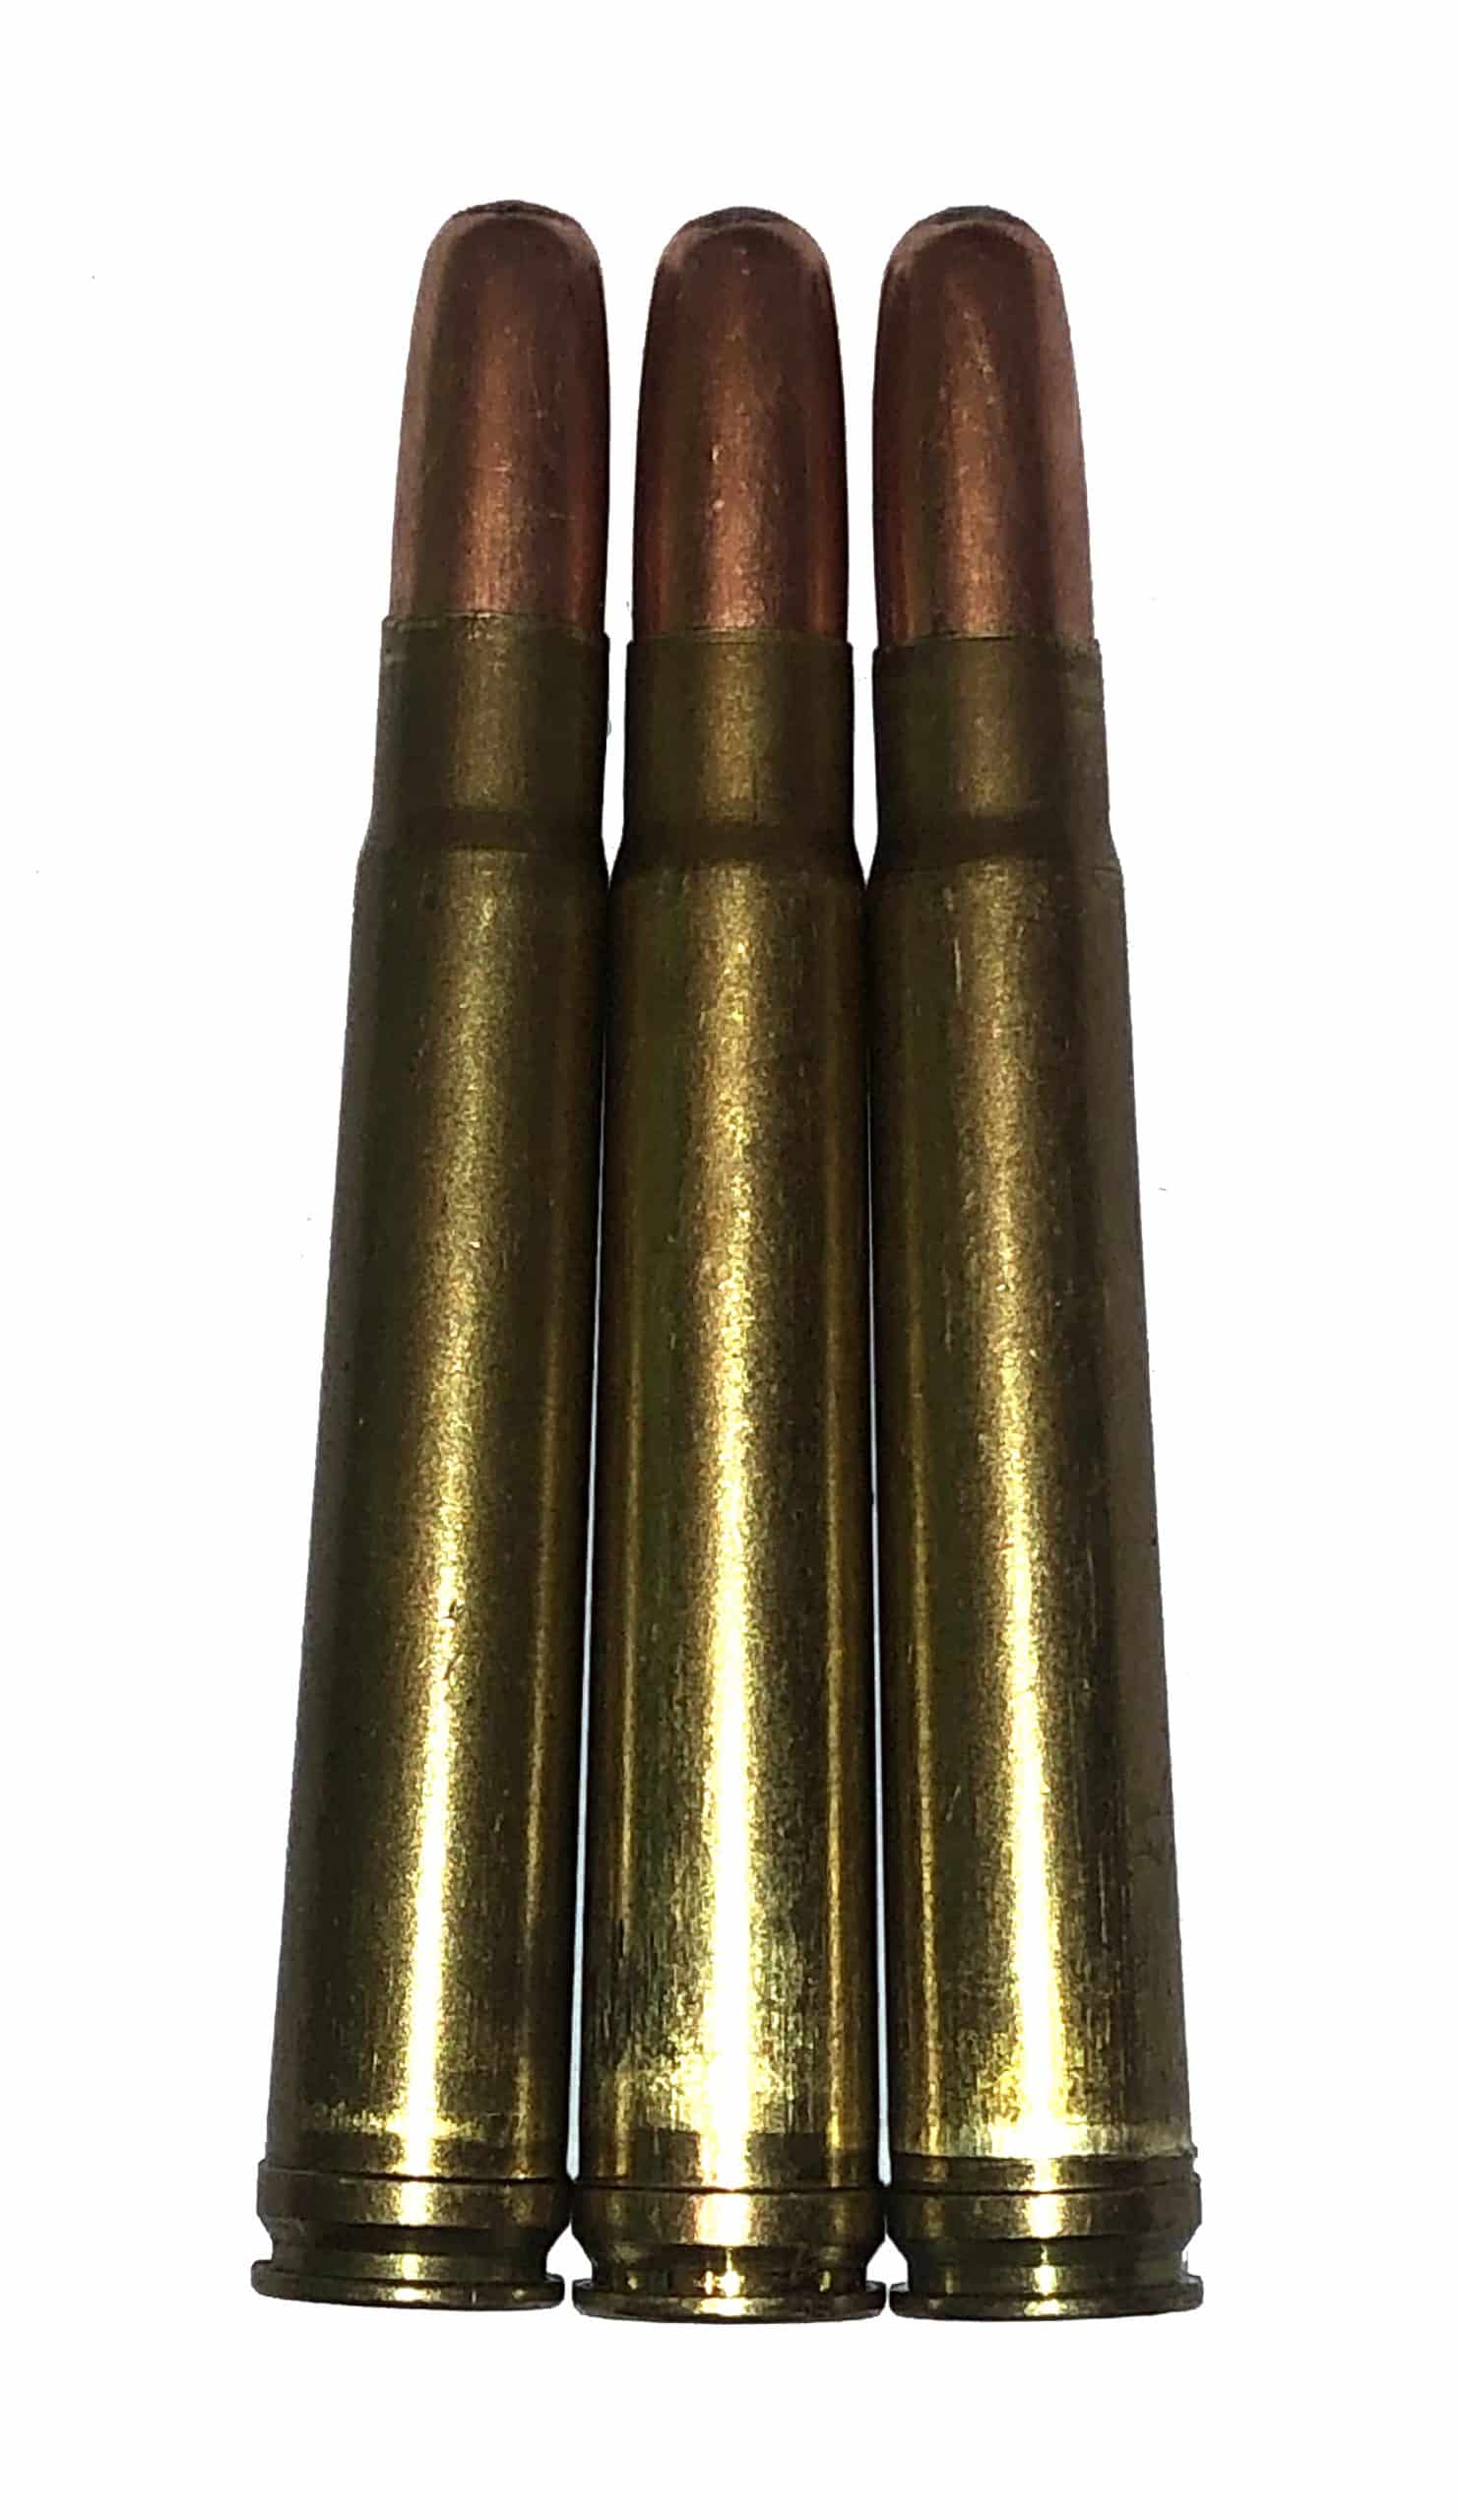 375 H&H Magnum Dummy Rounds Fake Bullets J&M Spec INERT